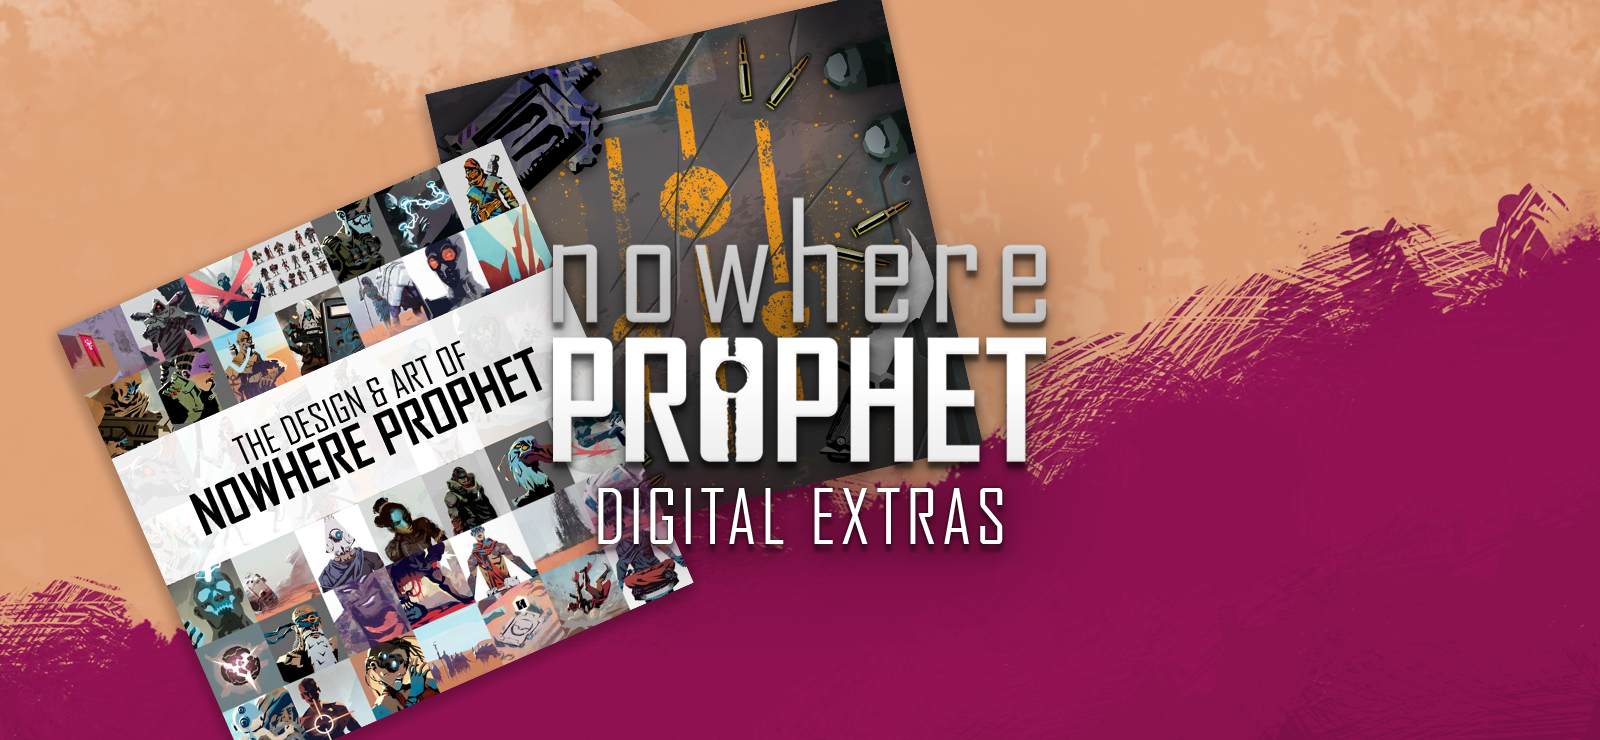 Nowhere Prophet - Digital Extras